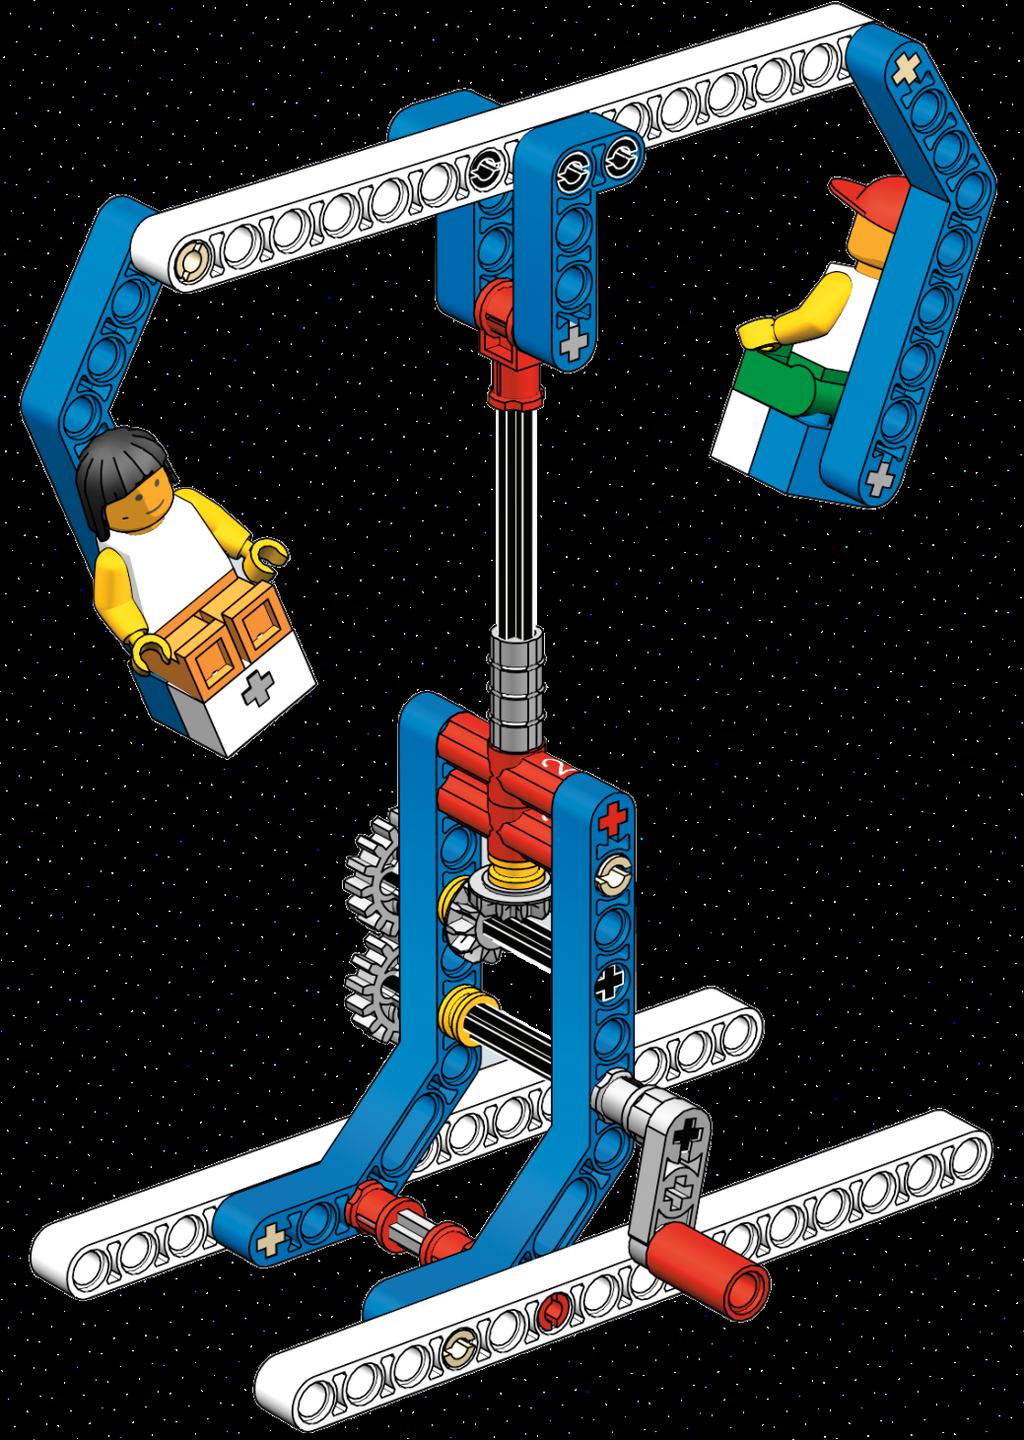 LEGO, the LEGO logo are trademarks